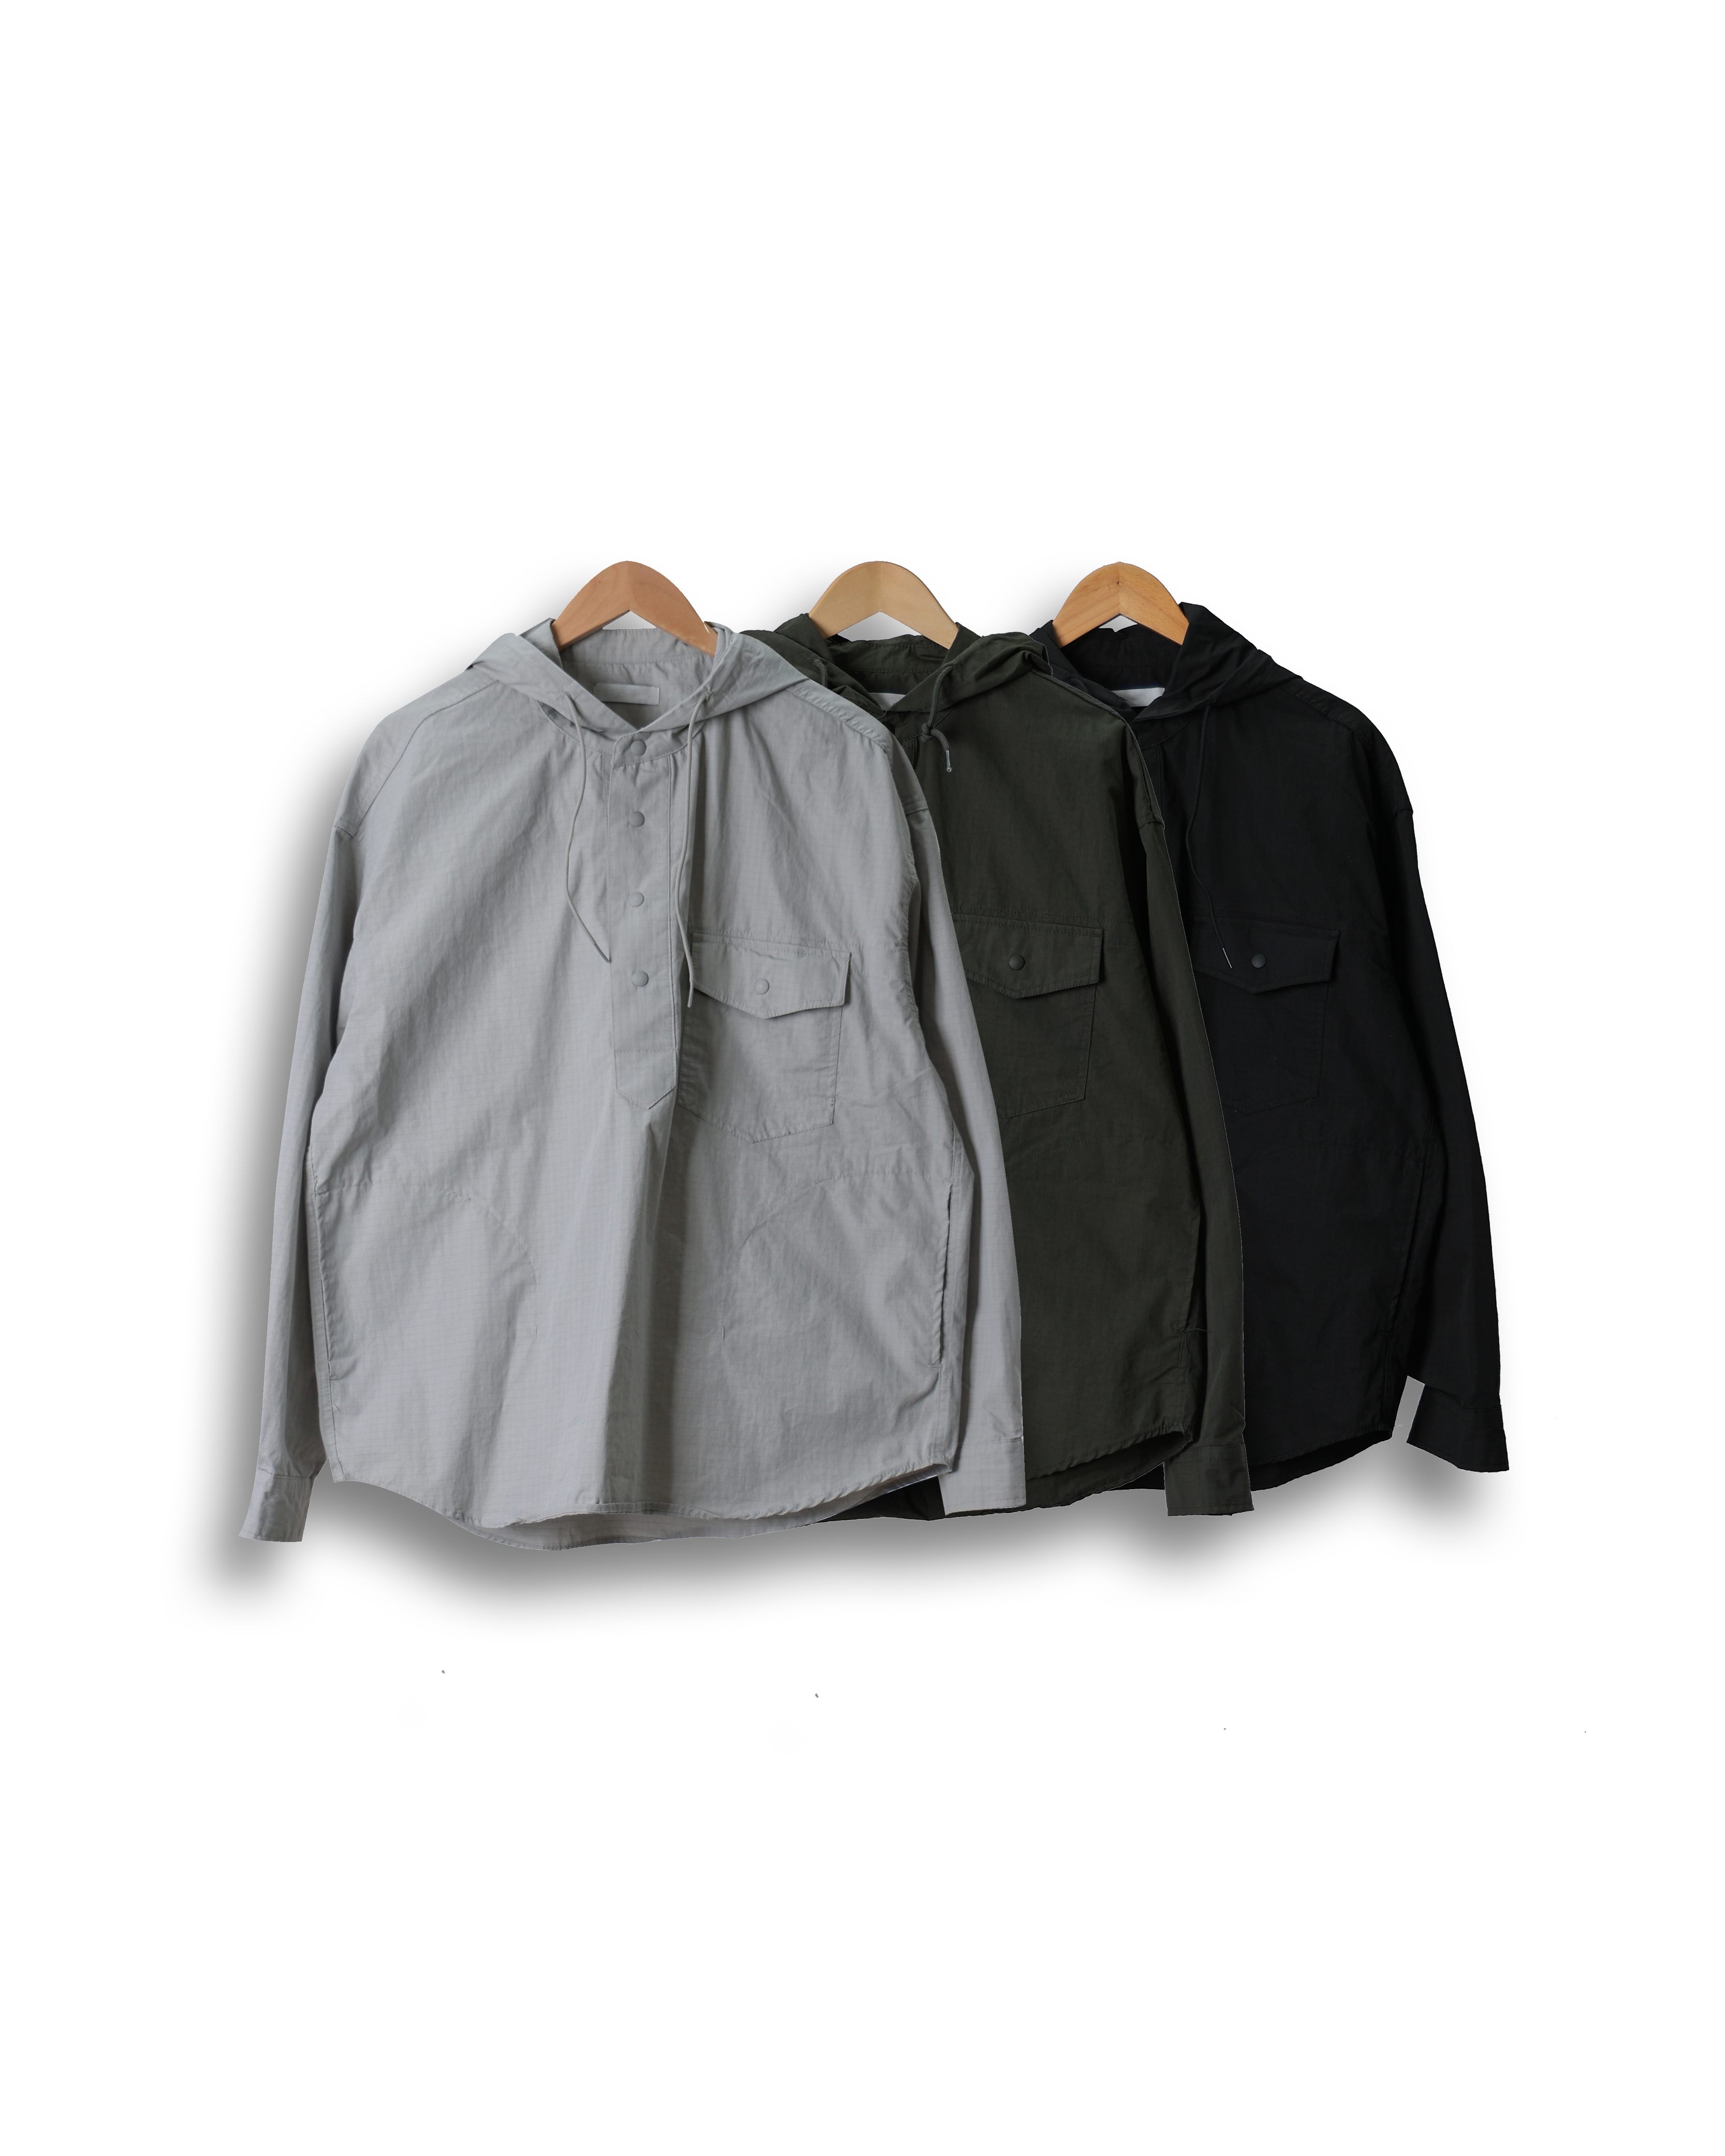 SPEC Ripstop Hoodie Shirts Anorak Jacket (Black/Olive/Light Gray)